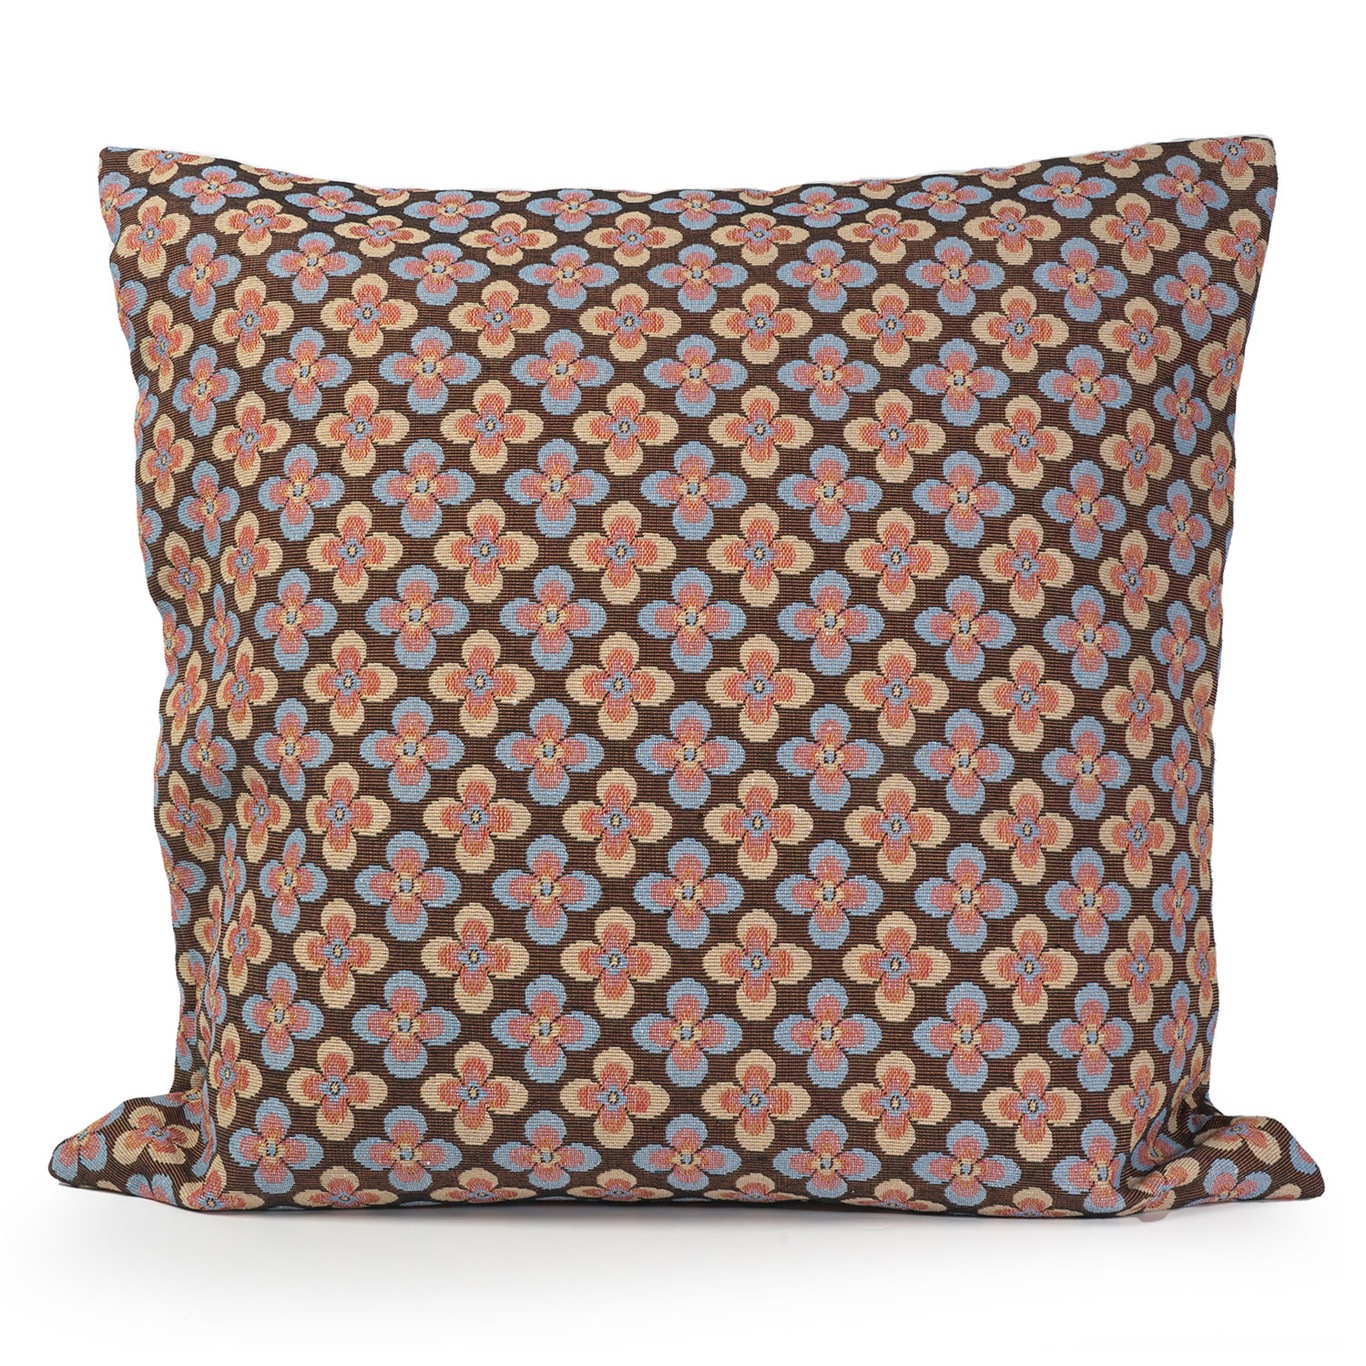 Clover Cushion Cover 50x50 cm, Orange